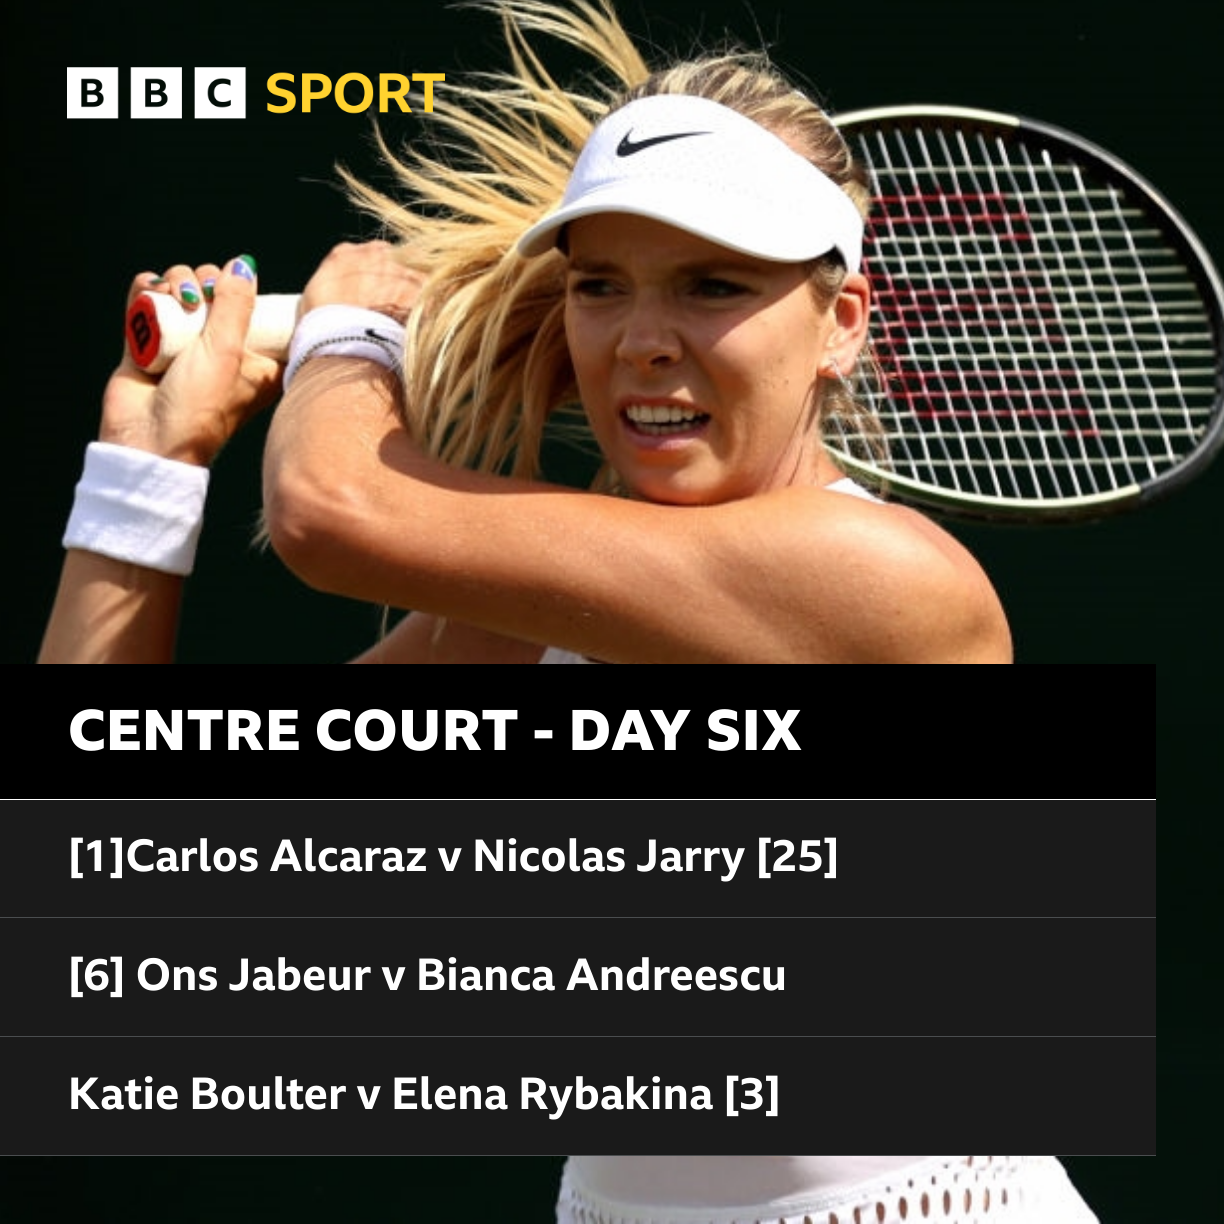 bbc tennis live stream